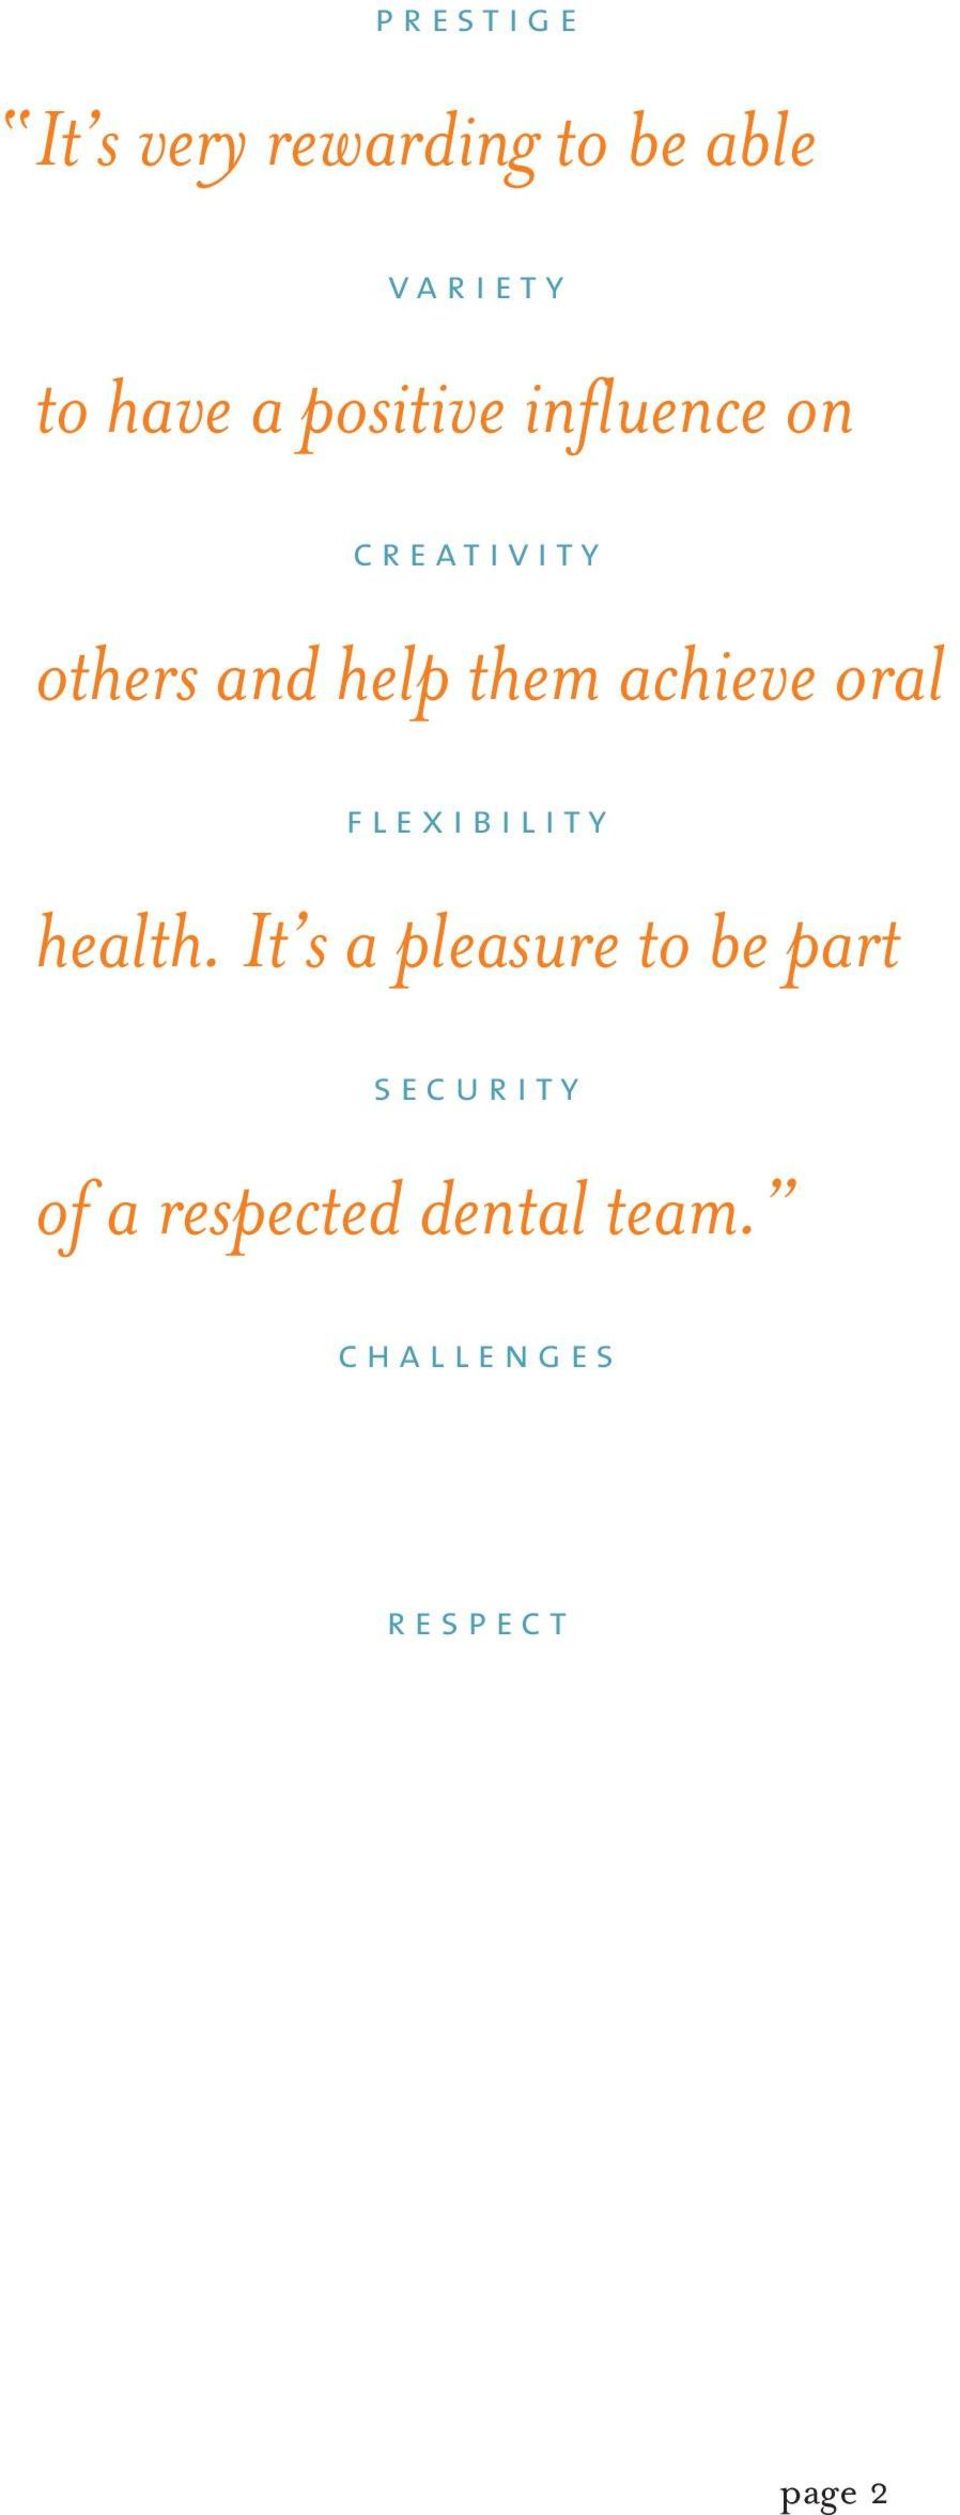 achieve oral flexibility health.